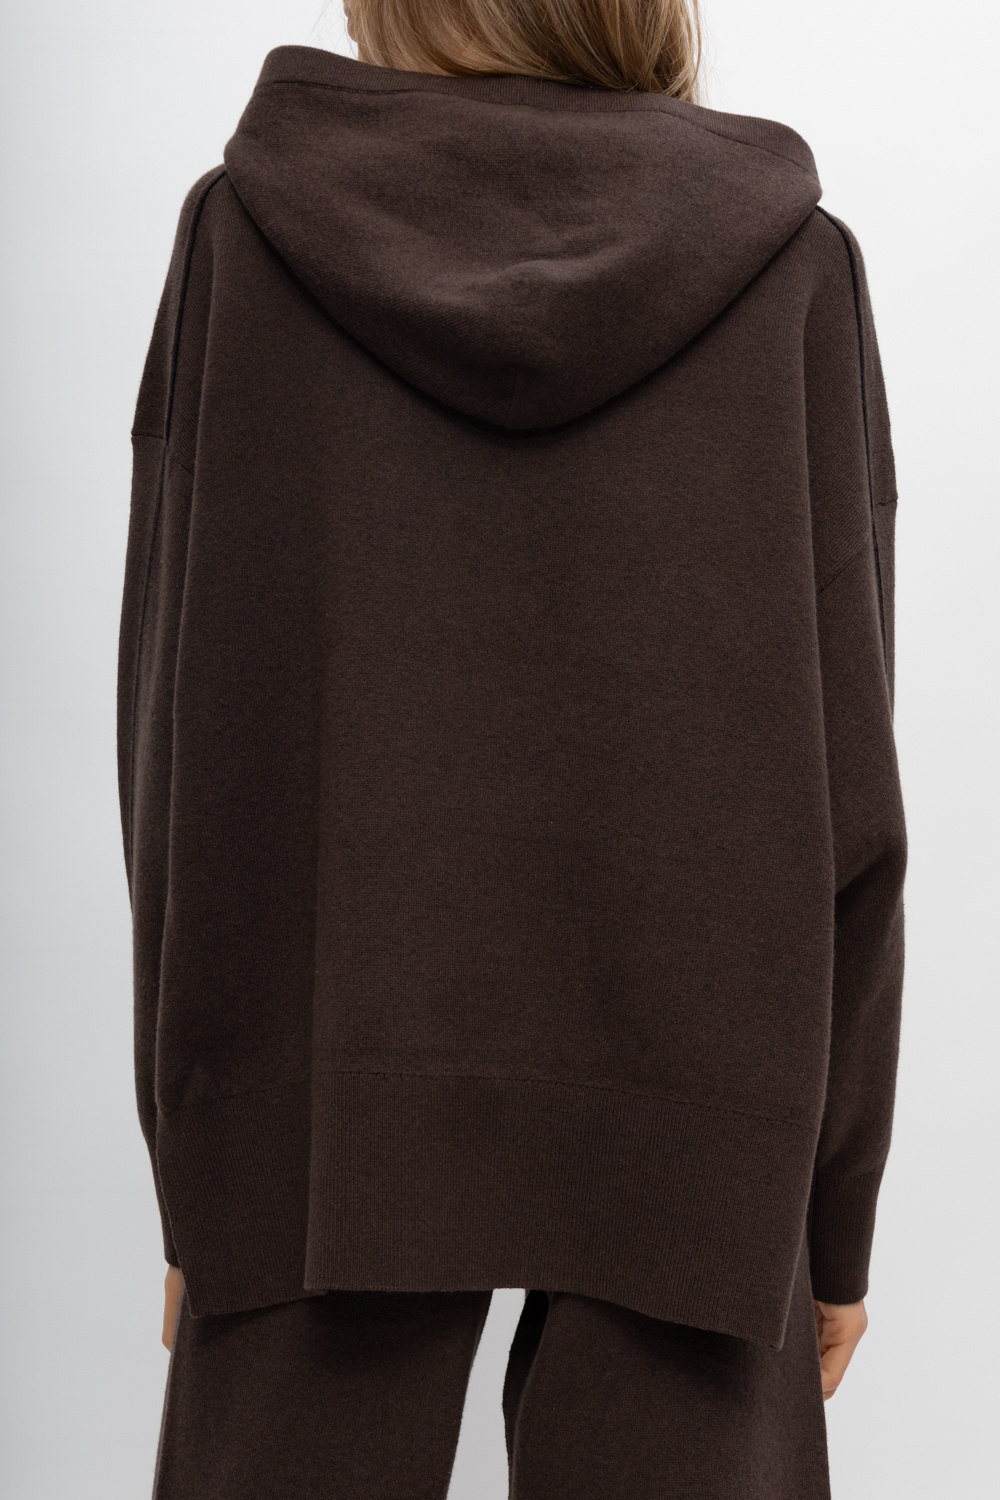 Proenza Schouler Brogues & Oxfords for Women Cotton hoodie